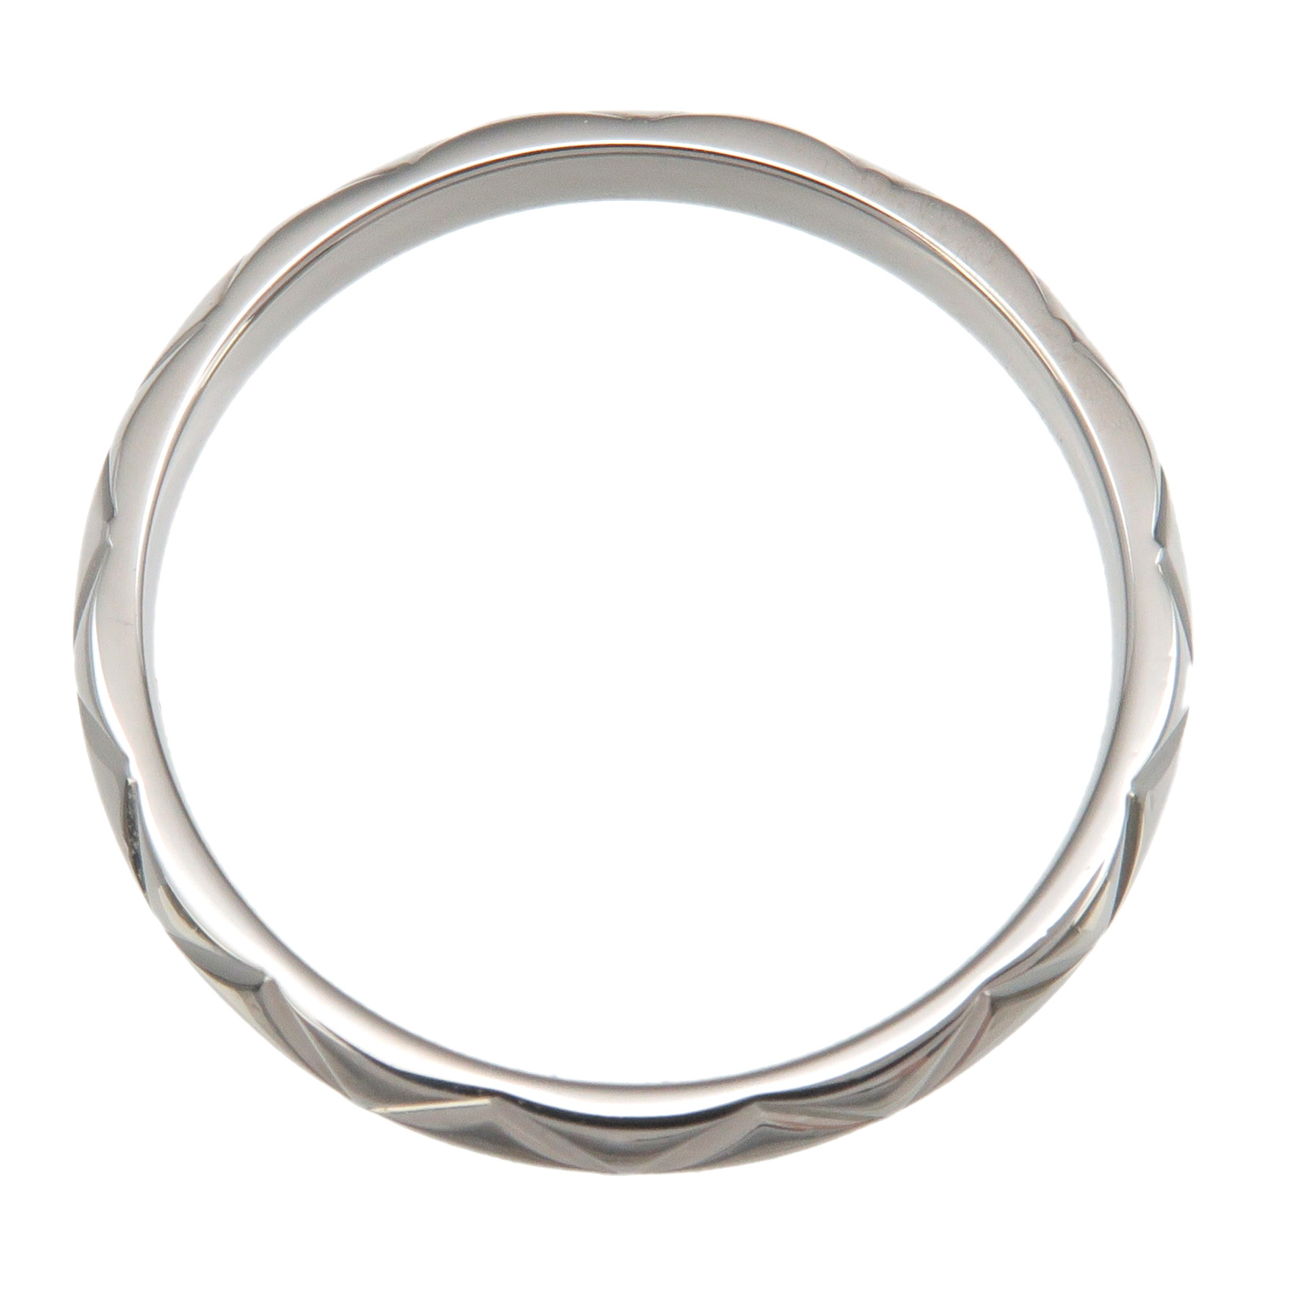 CHANEL Matelasse Ring Small PT950 Platinum #53 US6.5 EU53